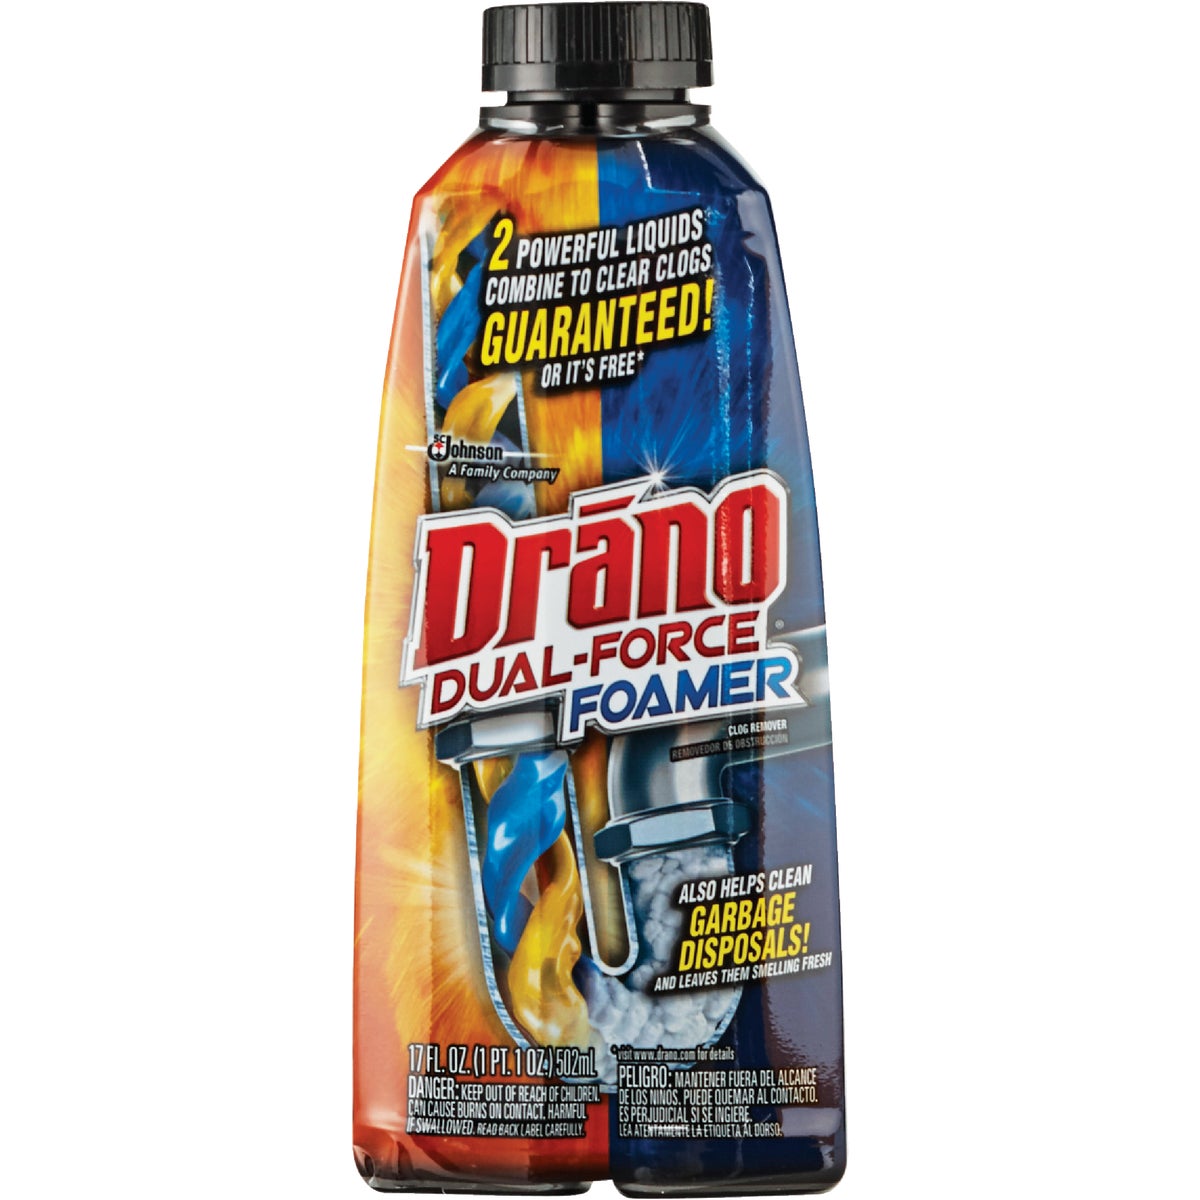 Drano 17 Oz. Dual Force Foaming Drain Cleaner